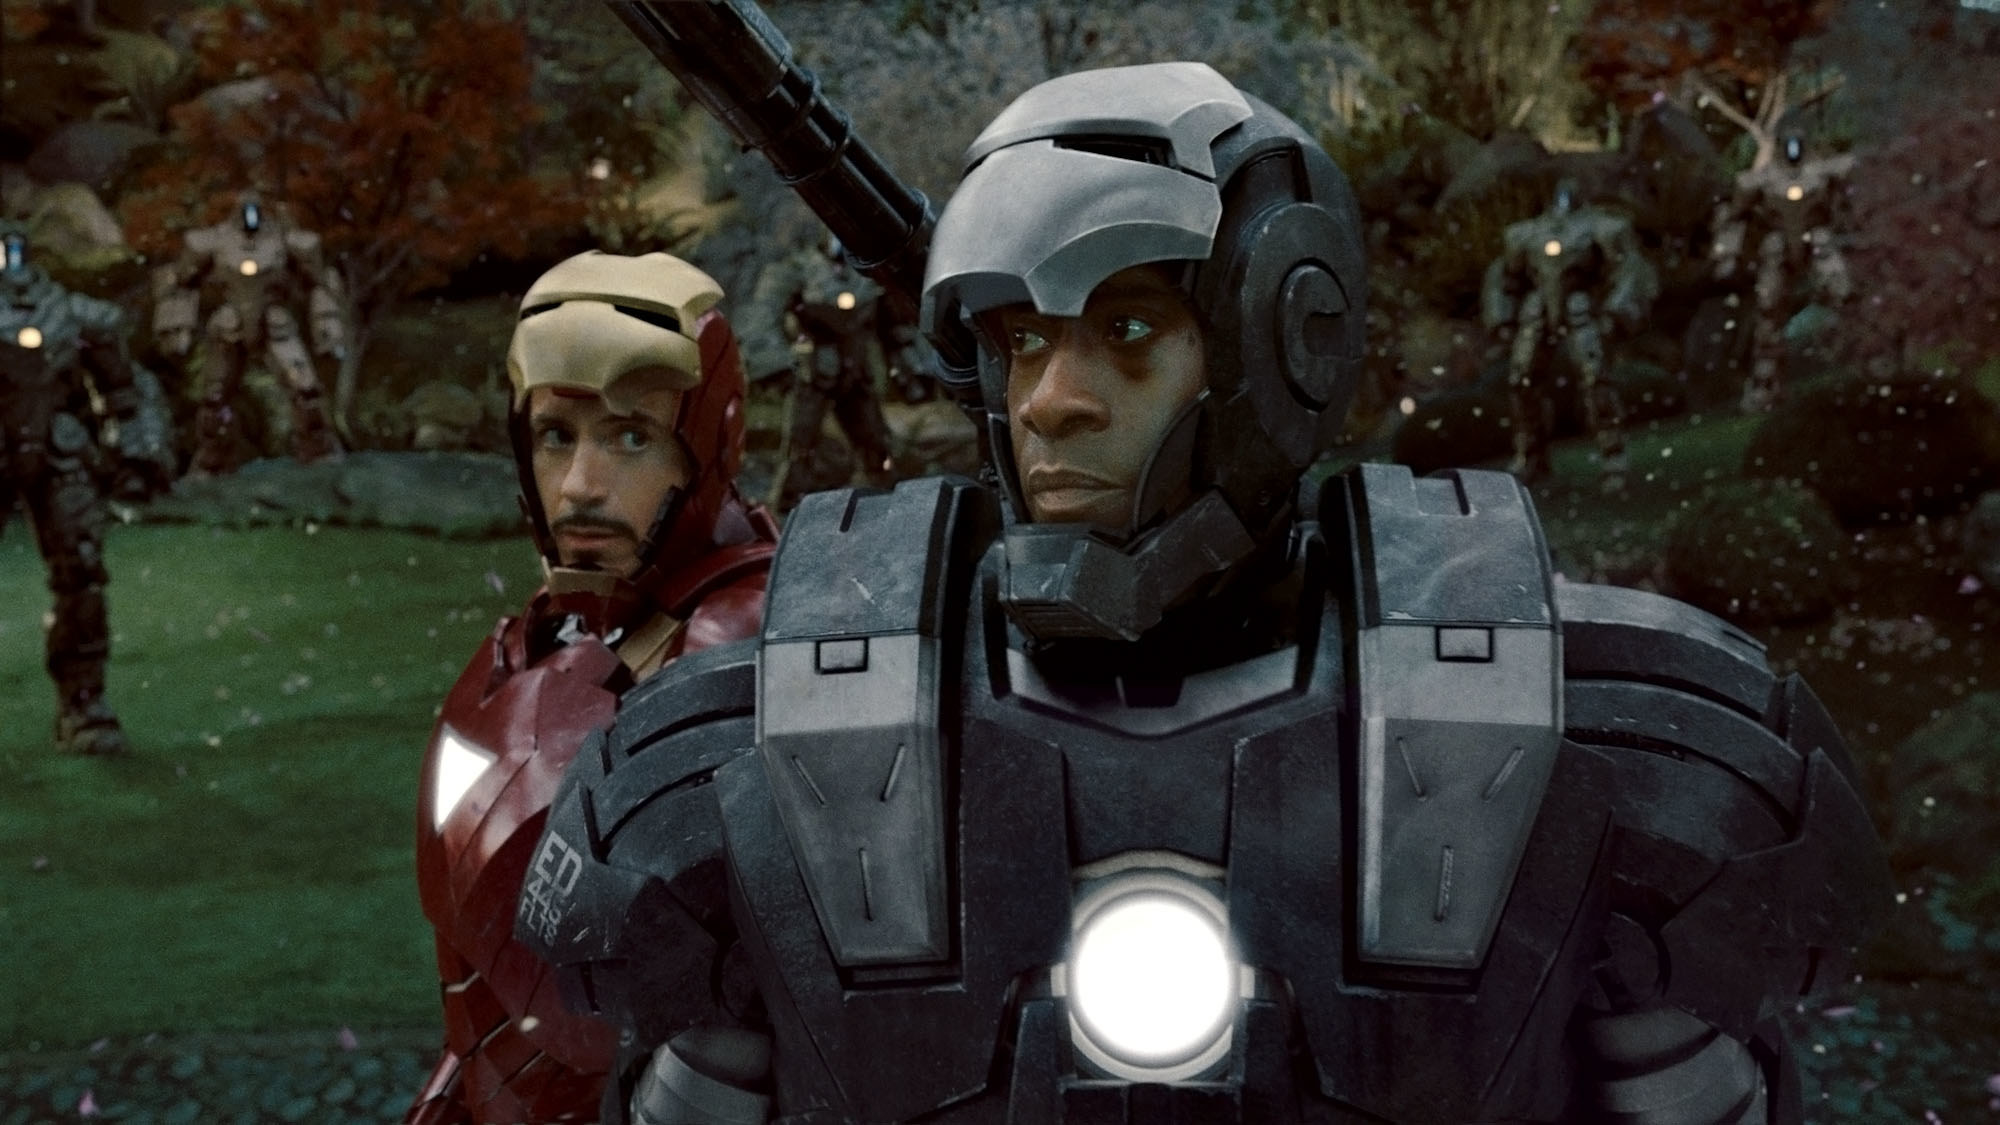 Iron Man and War Machine in iron man 3